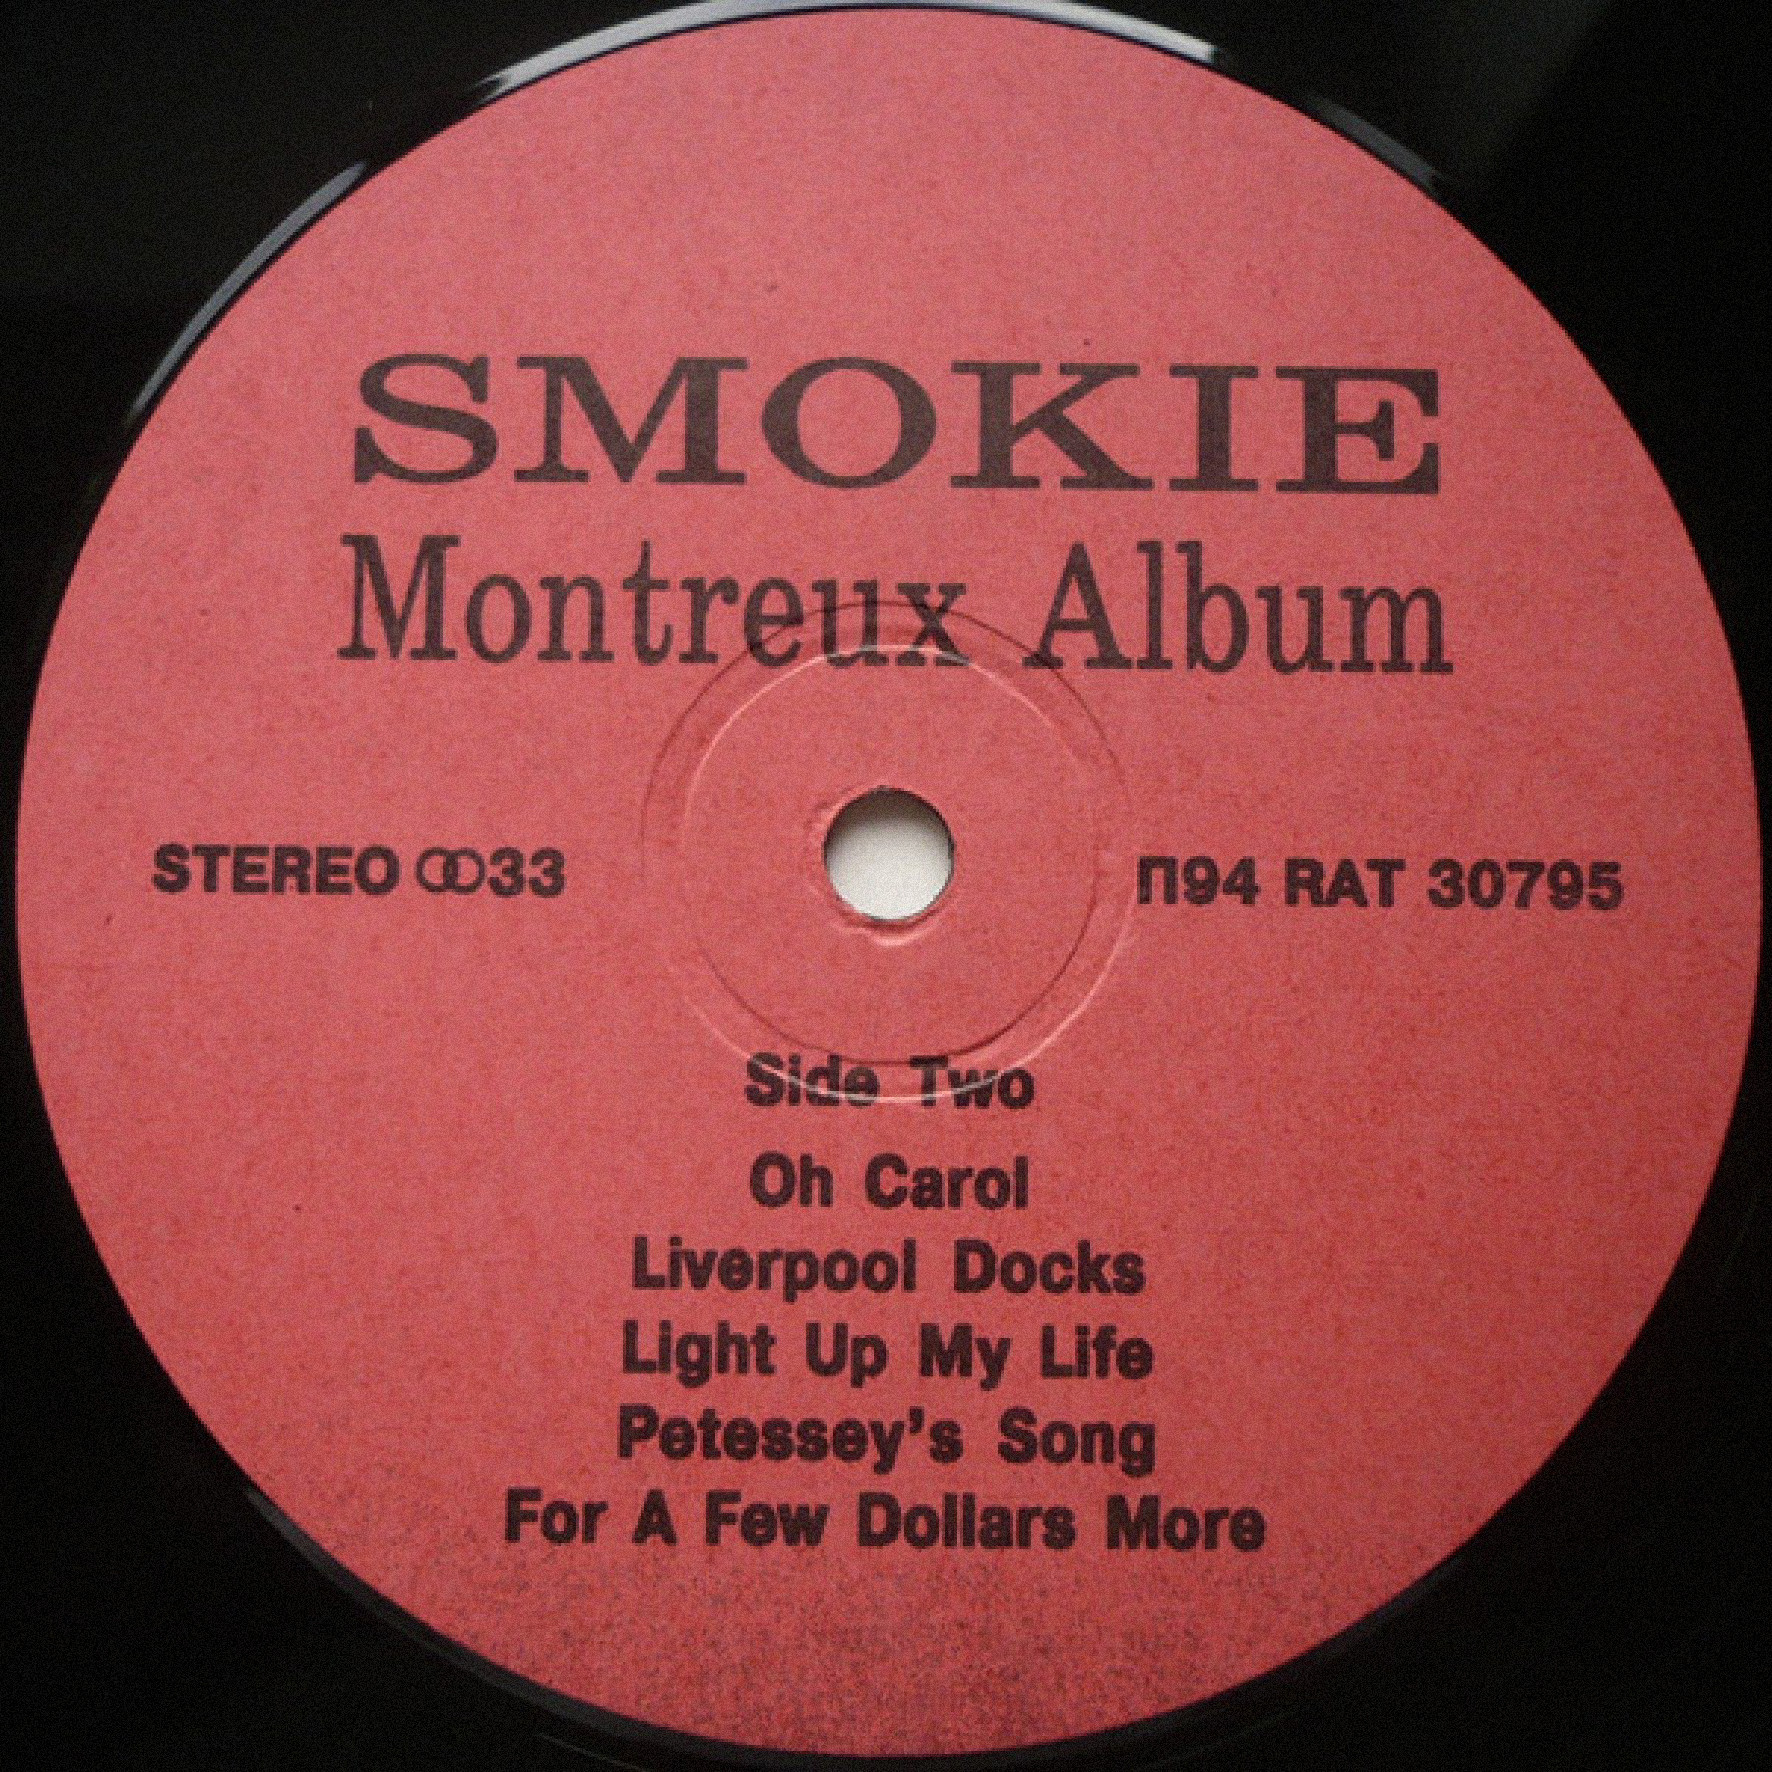 Smokie. The Montreux Album